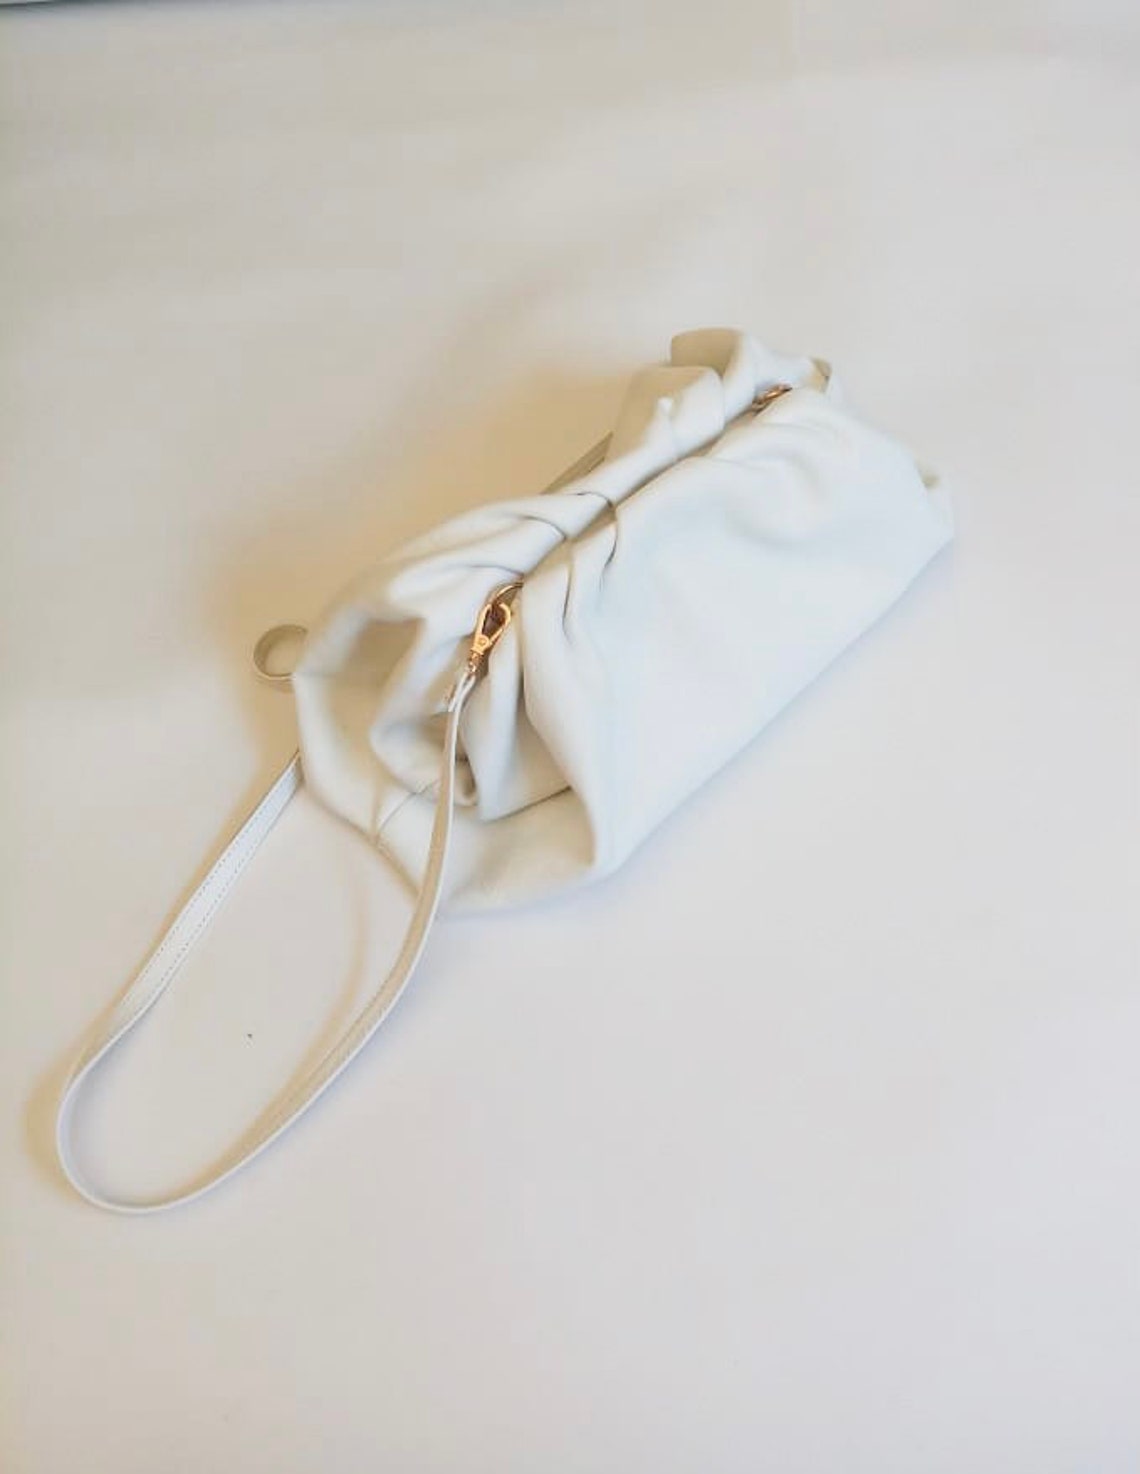 White cloud leather clutch leather dumpling purse evening | Etsy